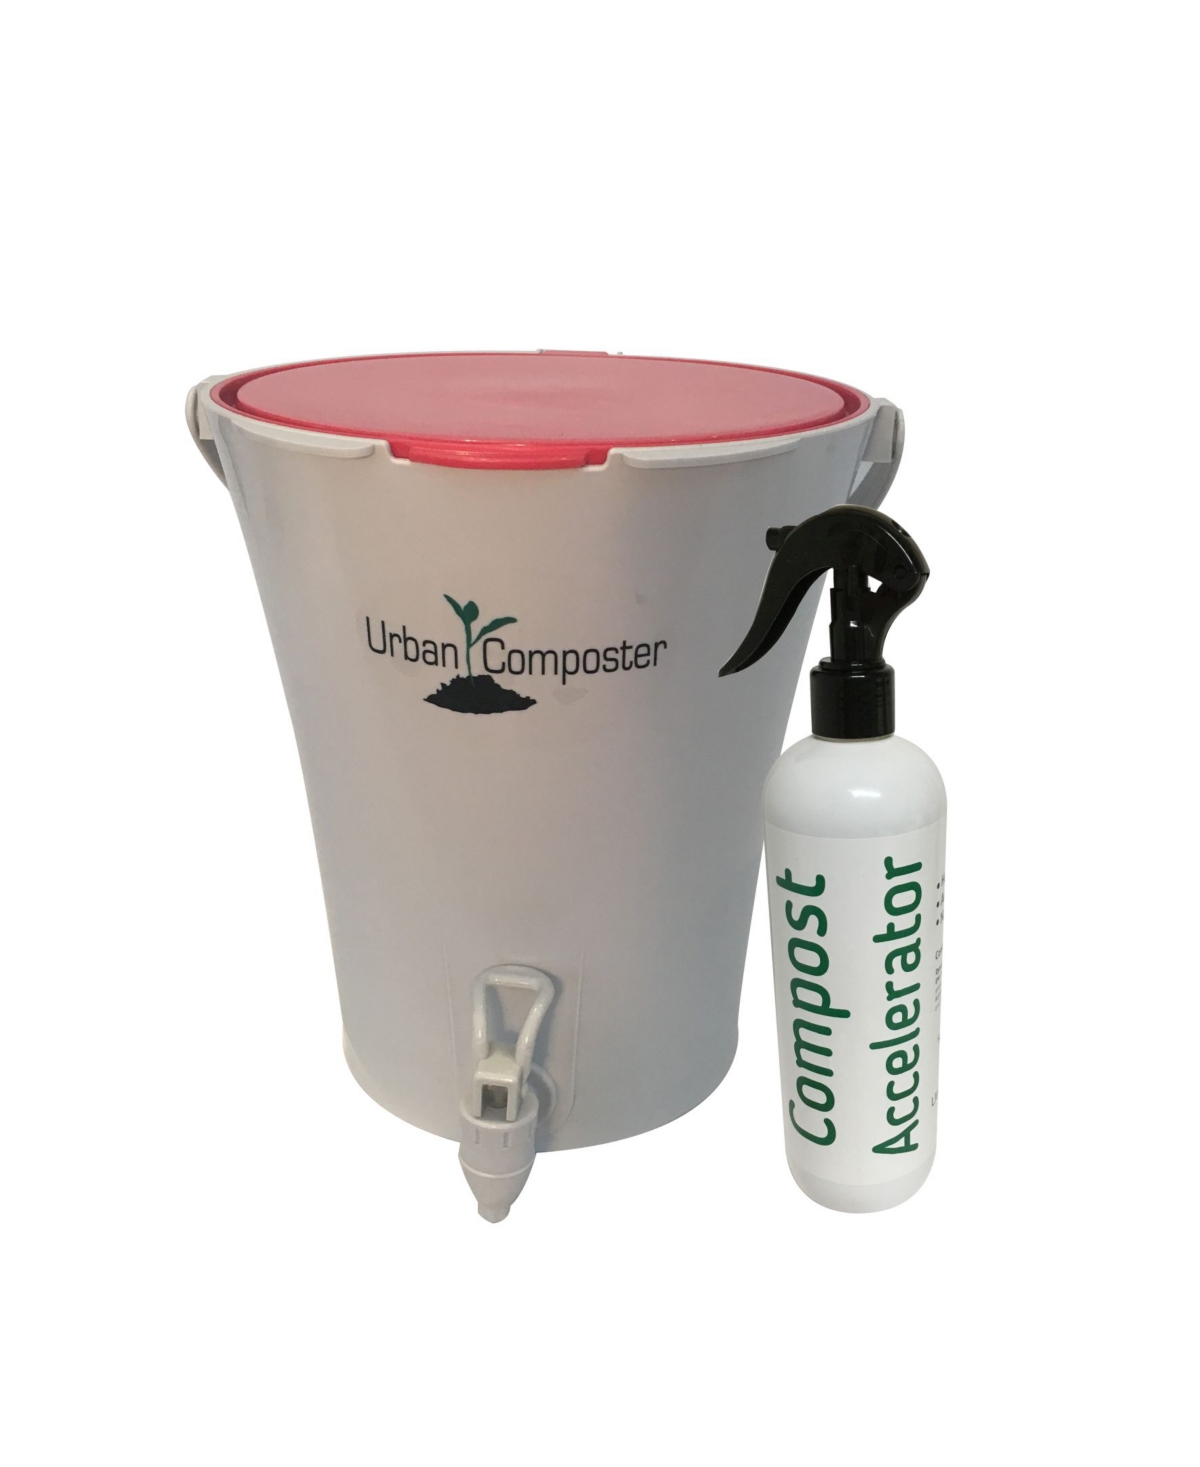 Exaco Trading Urban Composter and Urban Compost Accelerator Spray Kit